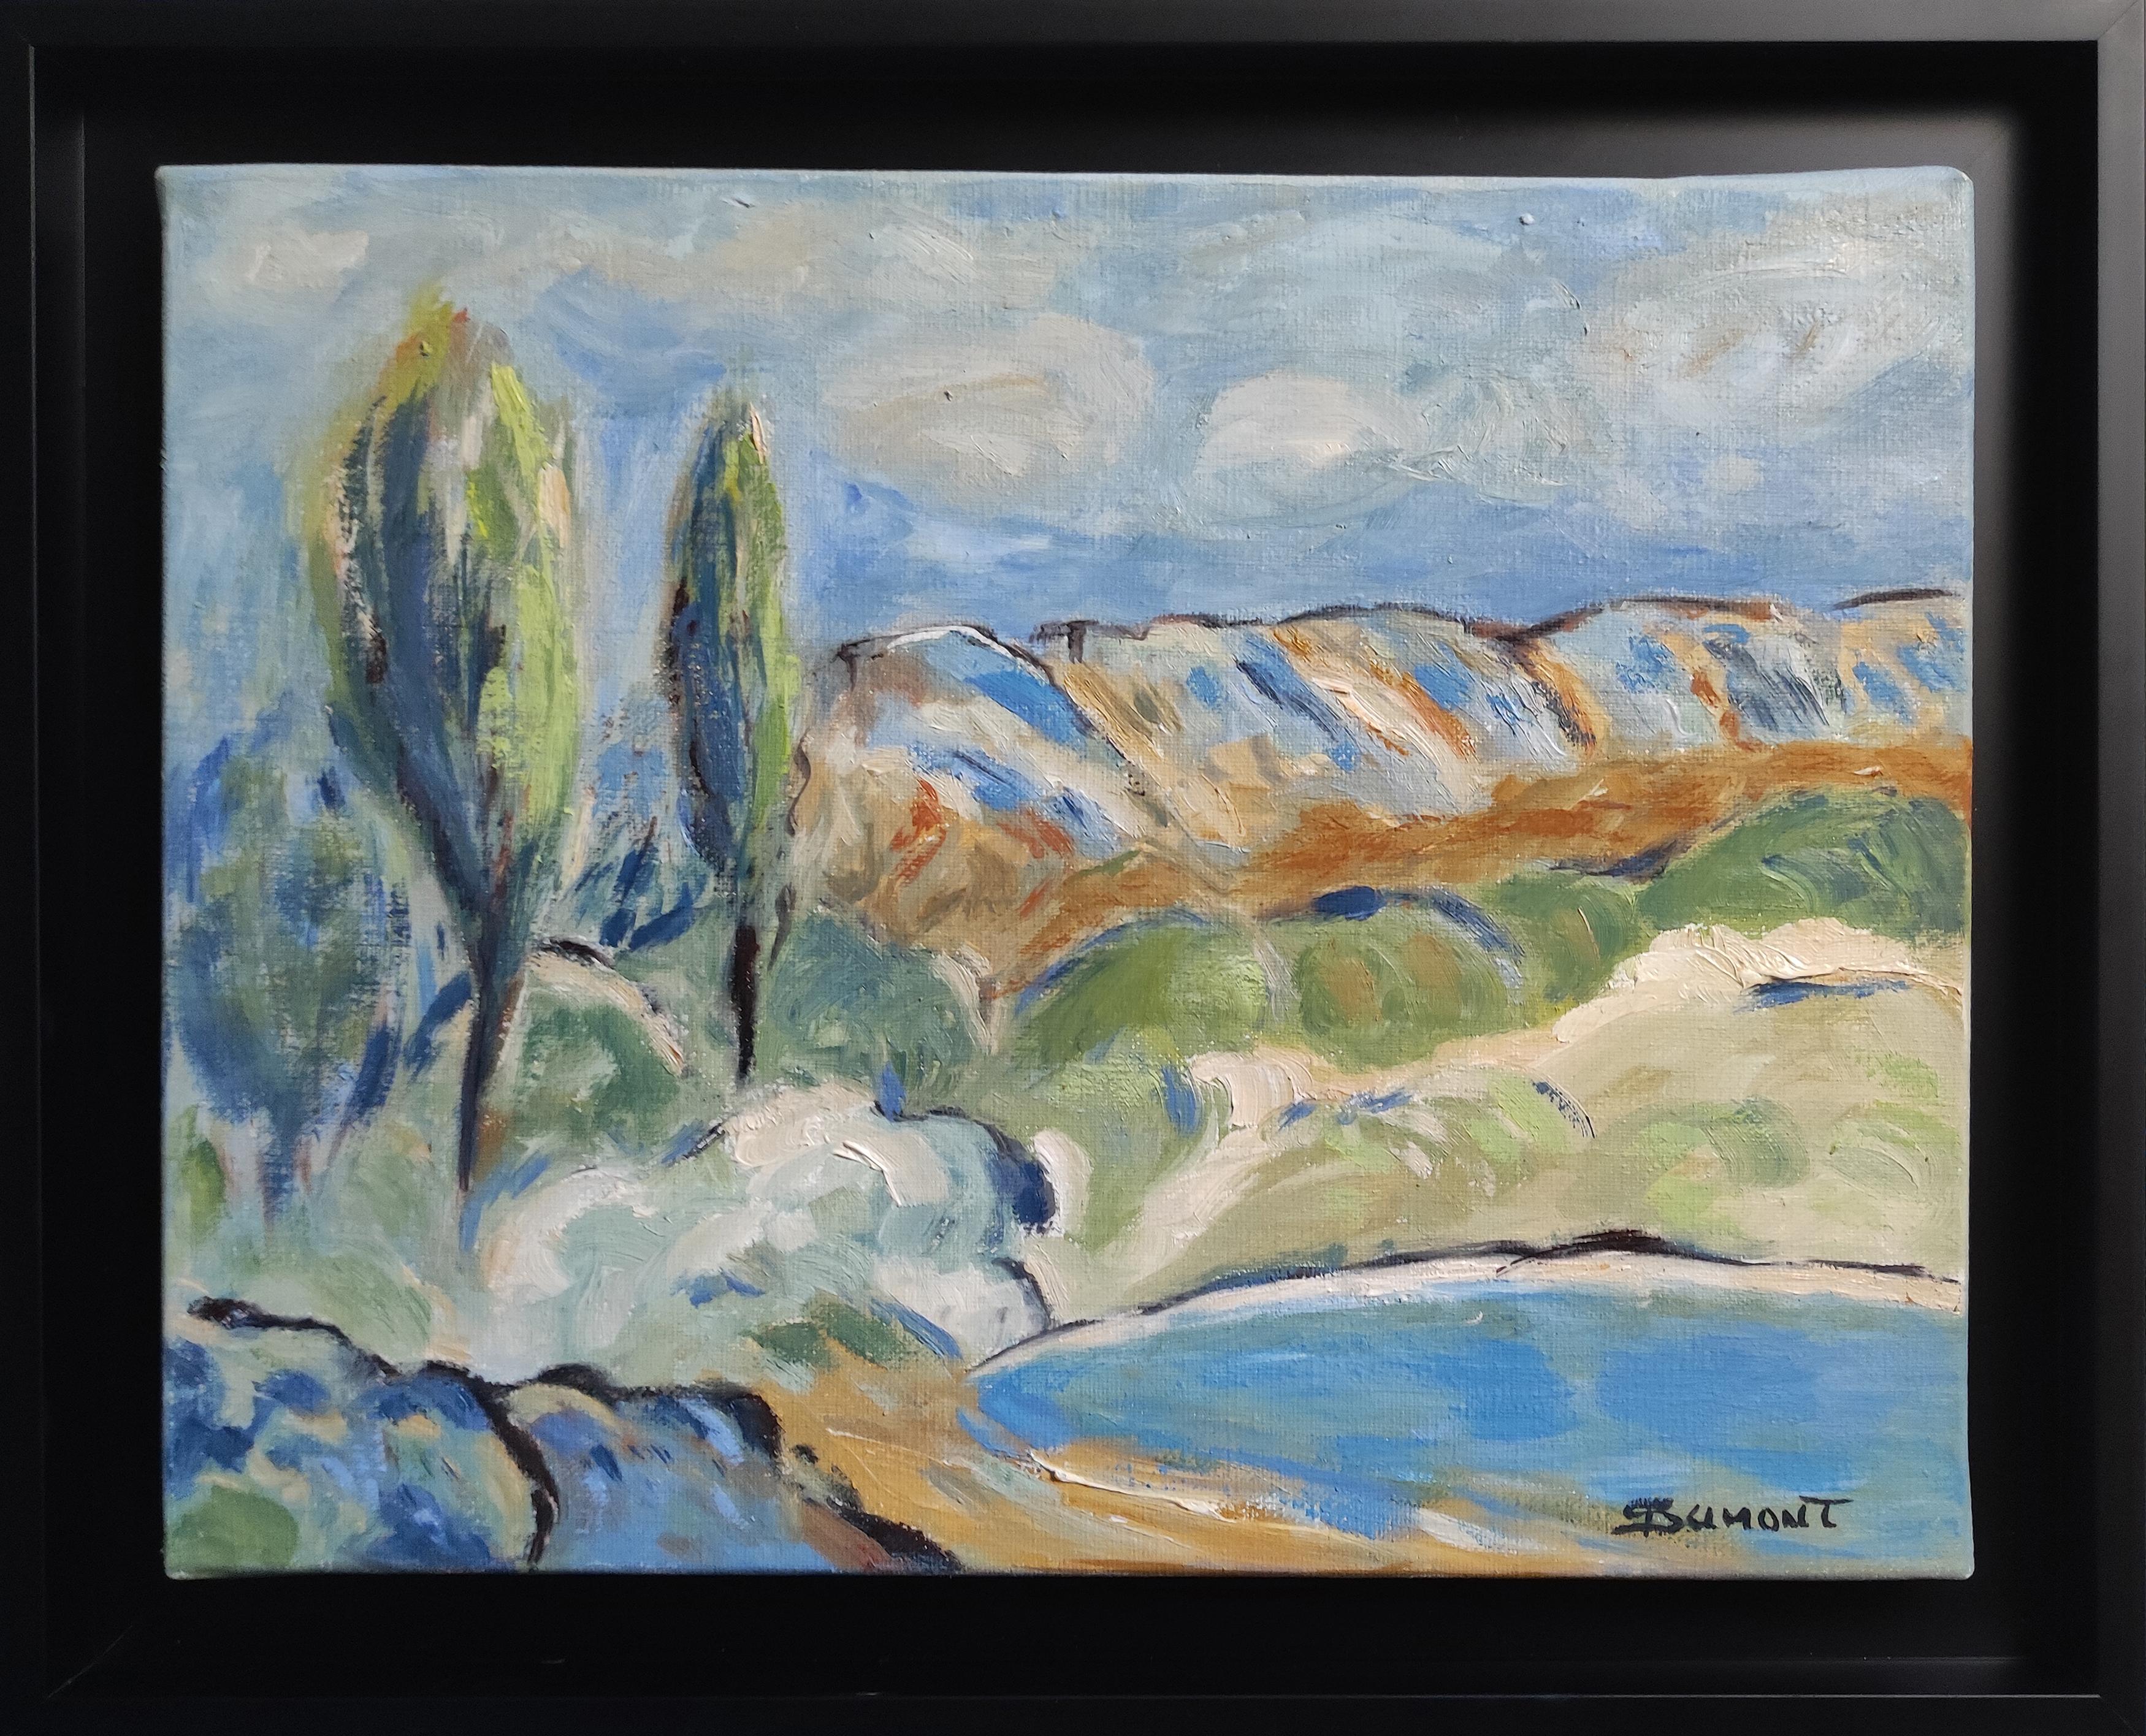 SOPHIE DUMONT Figurative Painting - champêtre, countryside landscape, oil on canvas, French school, figurative, blue